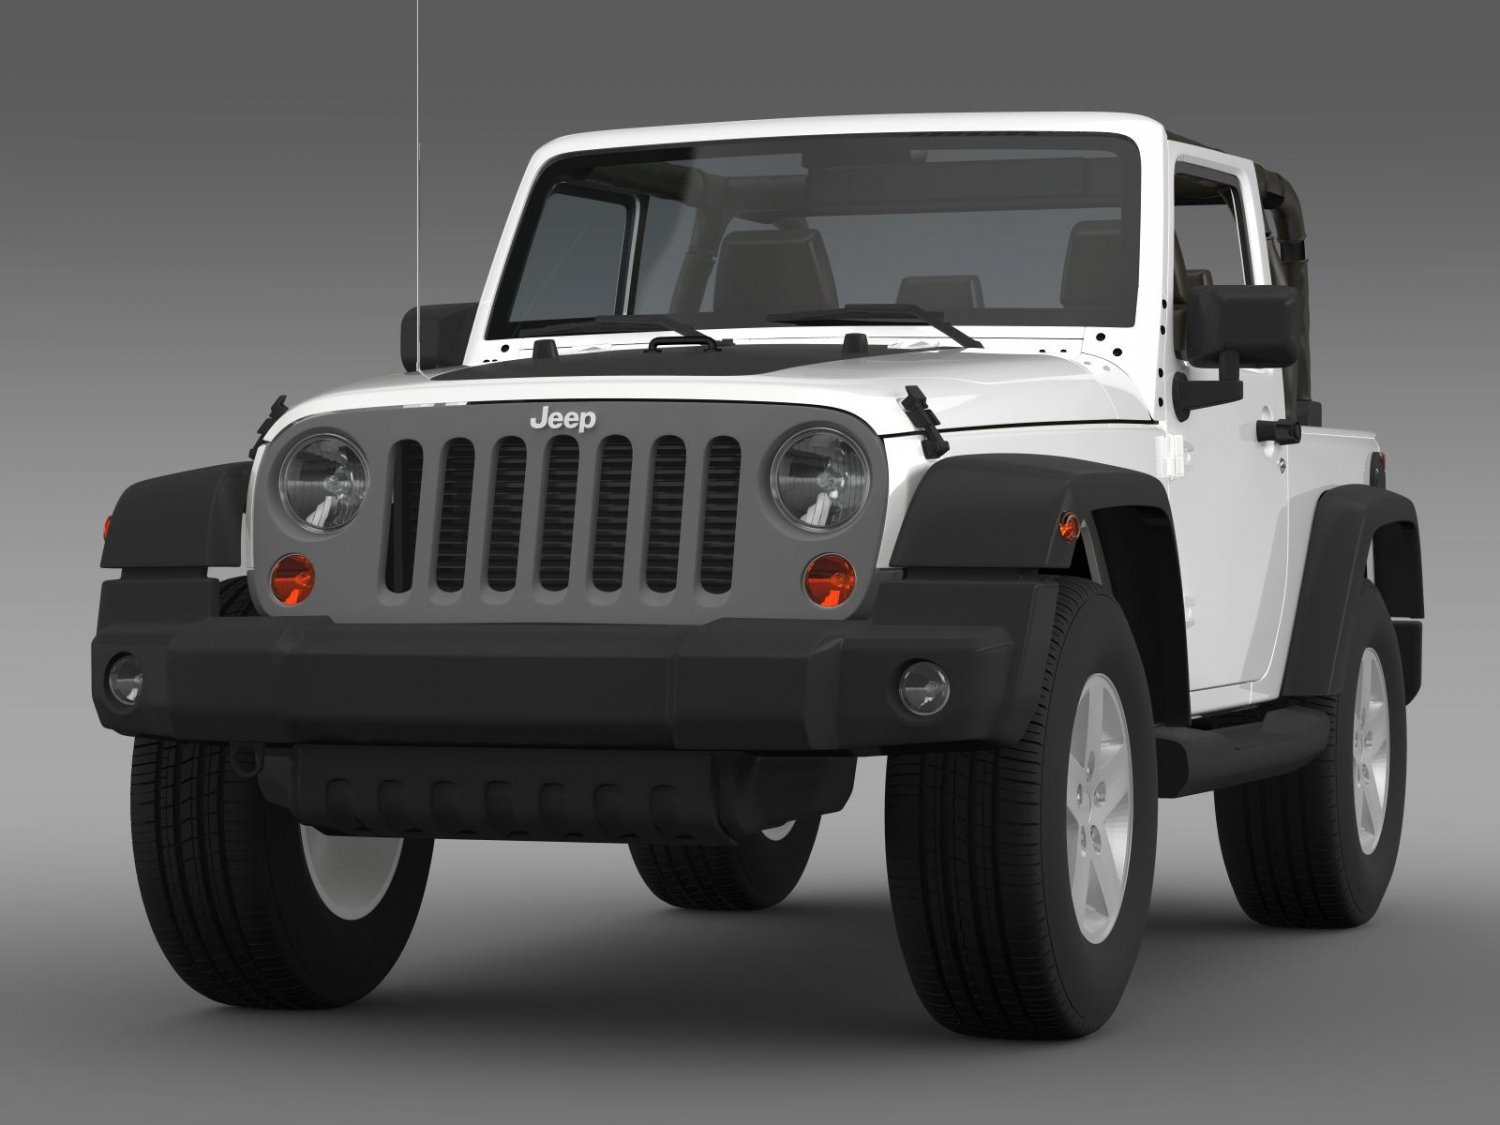 2010 jeep models